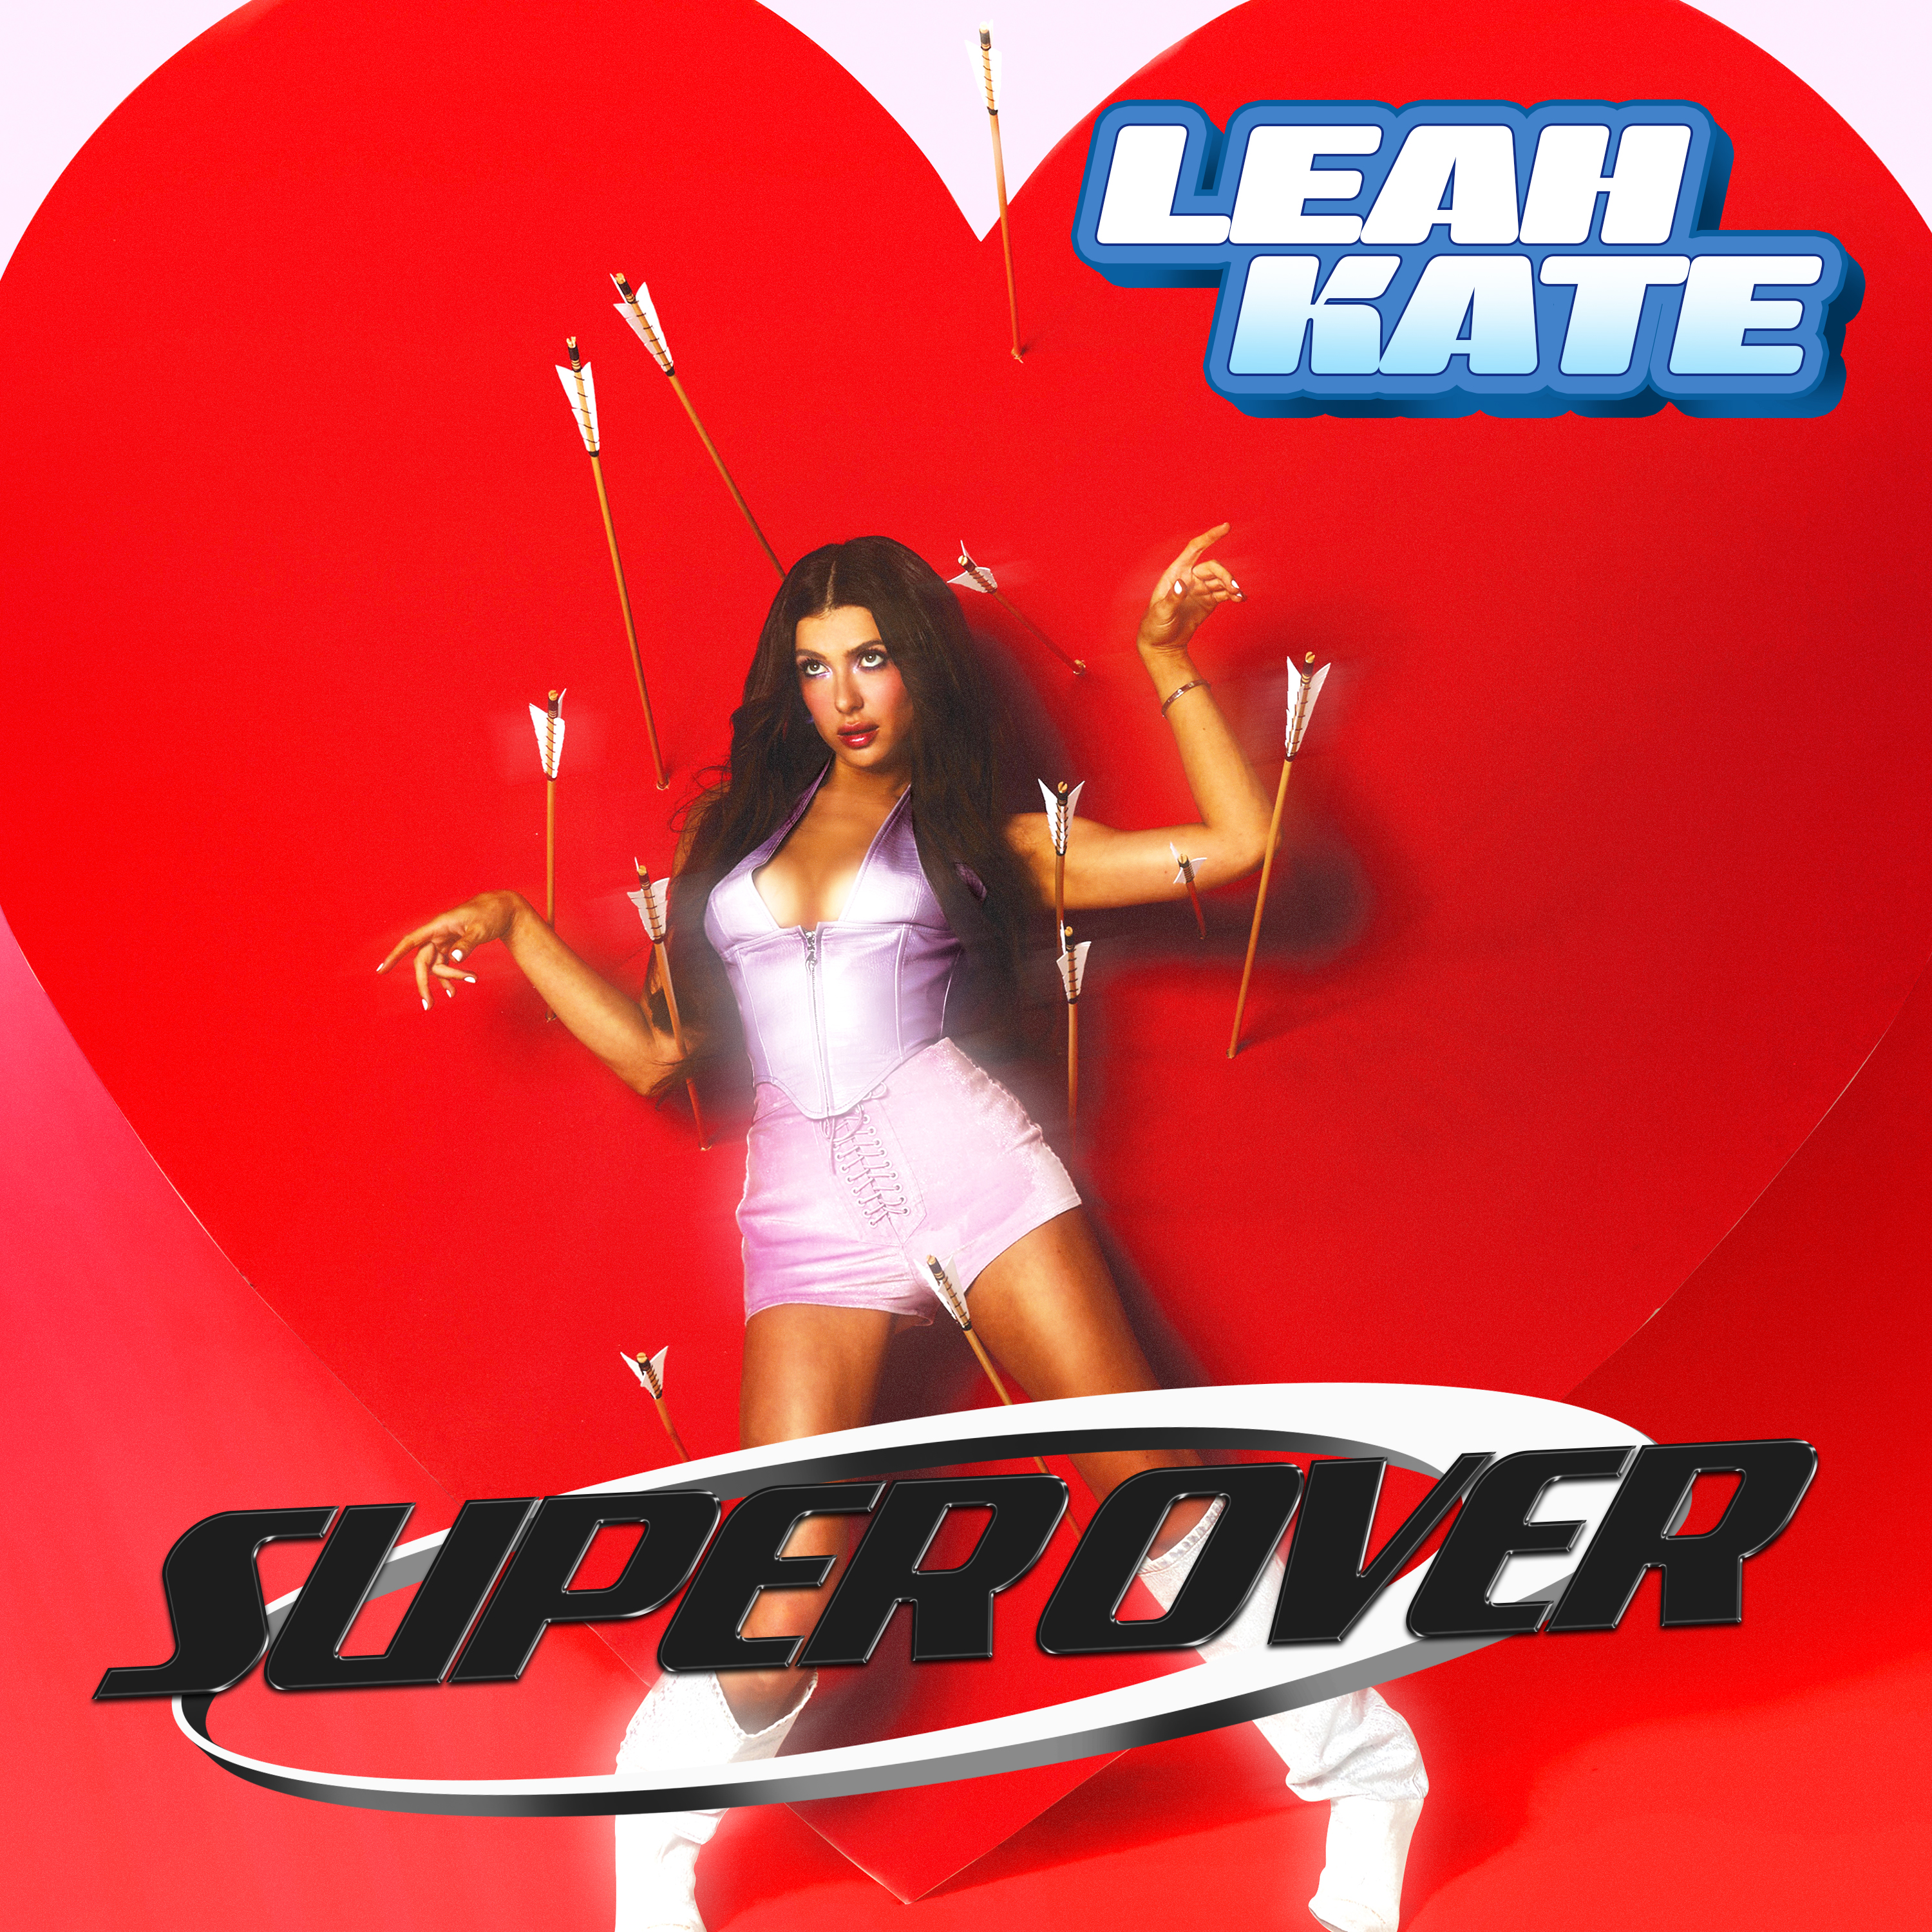 Leah Kate — Super Over cover artwork